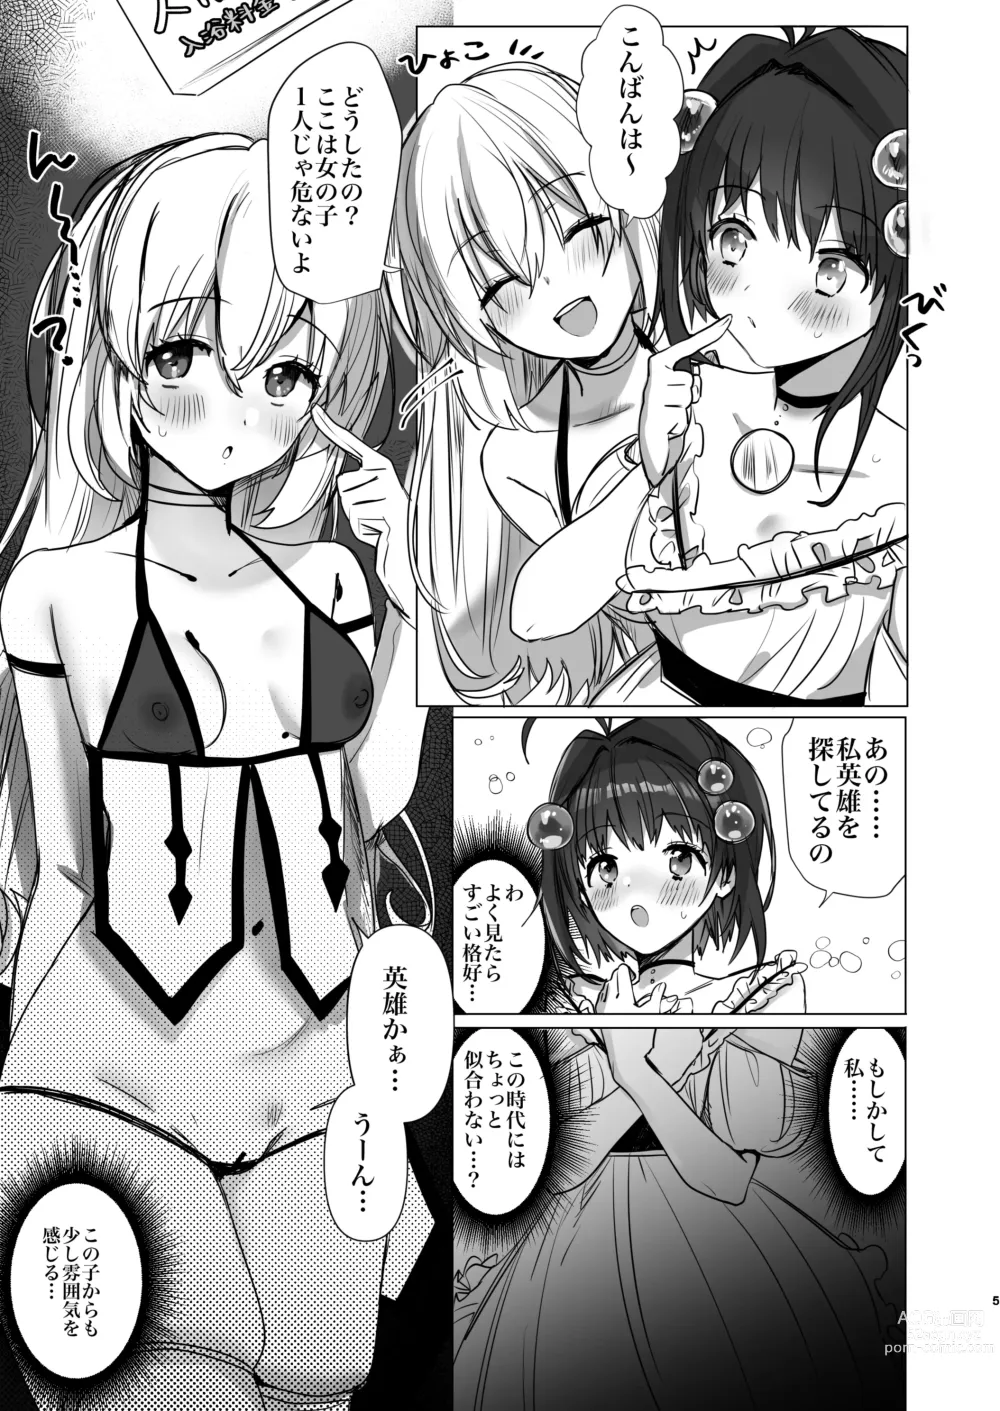 Page 5 of doujinshi Eiyuu wa kou sagase